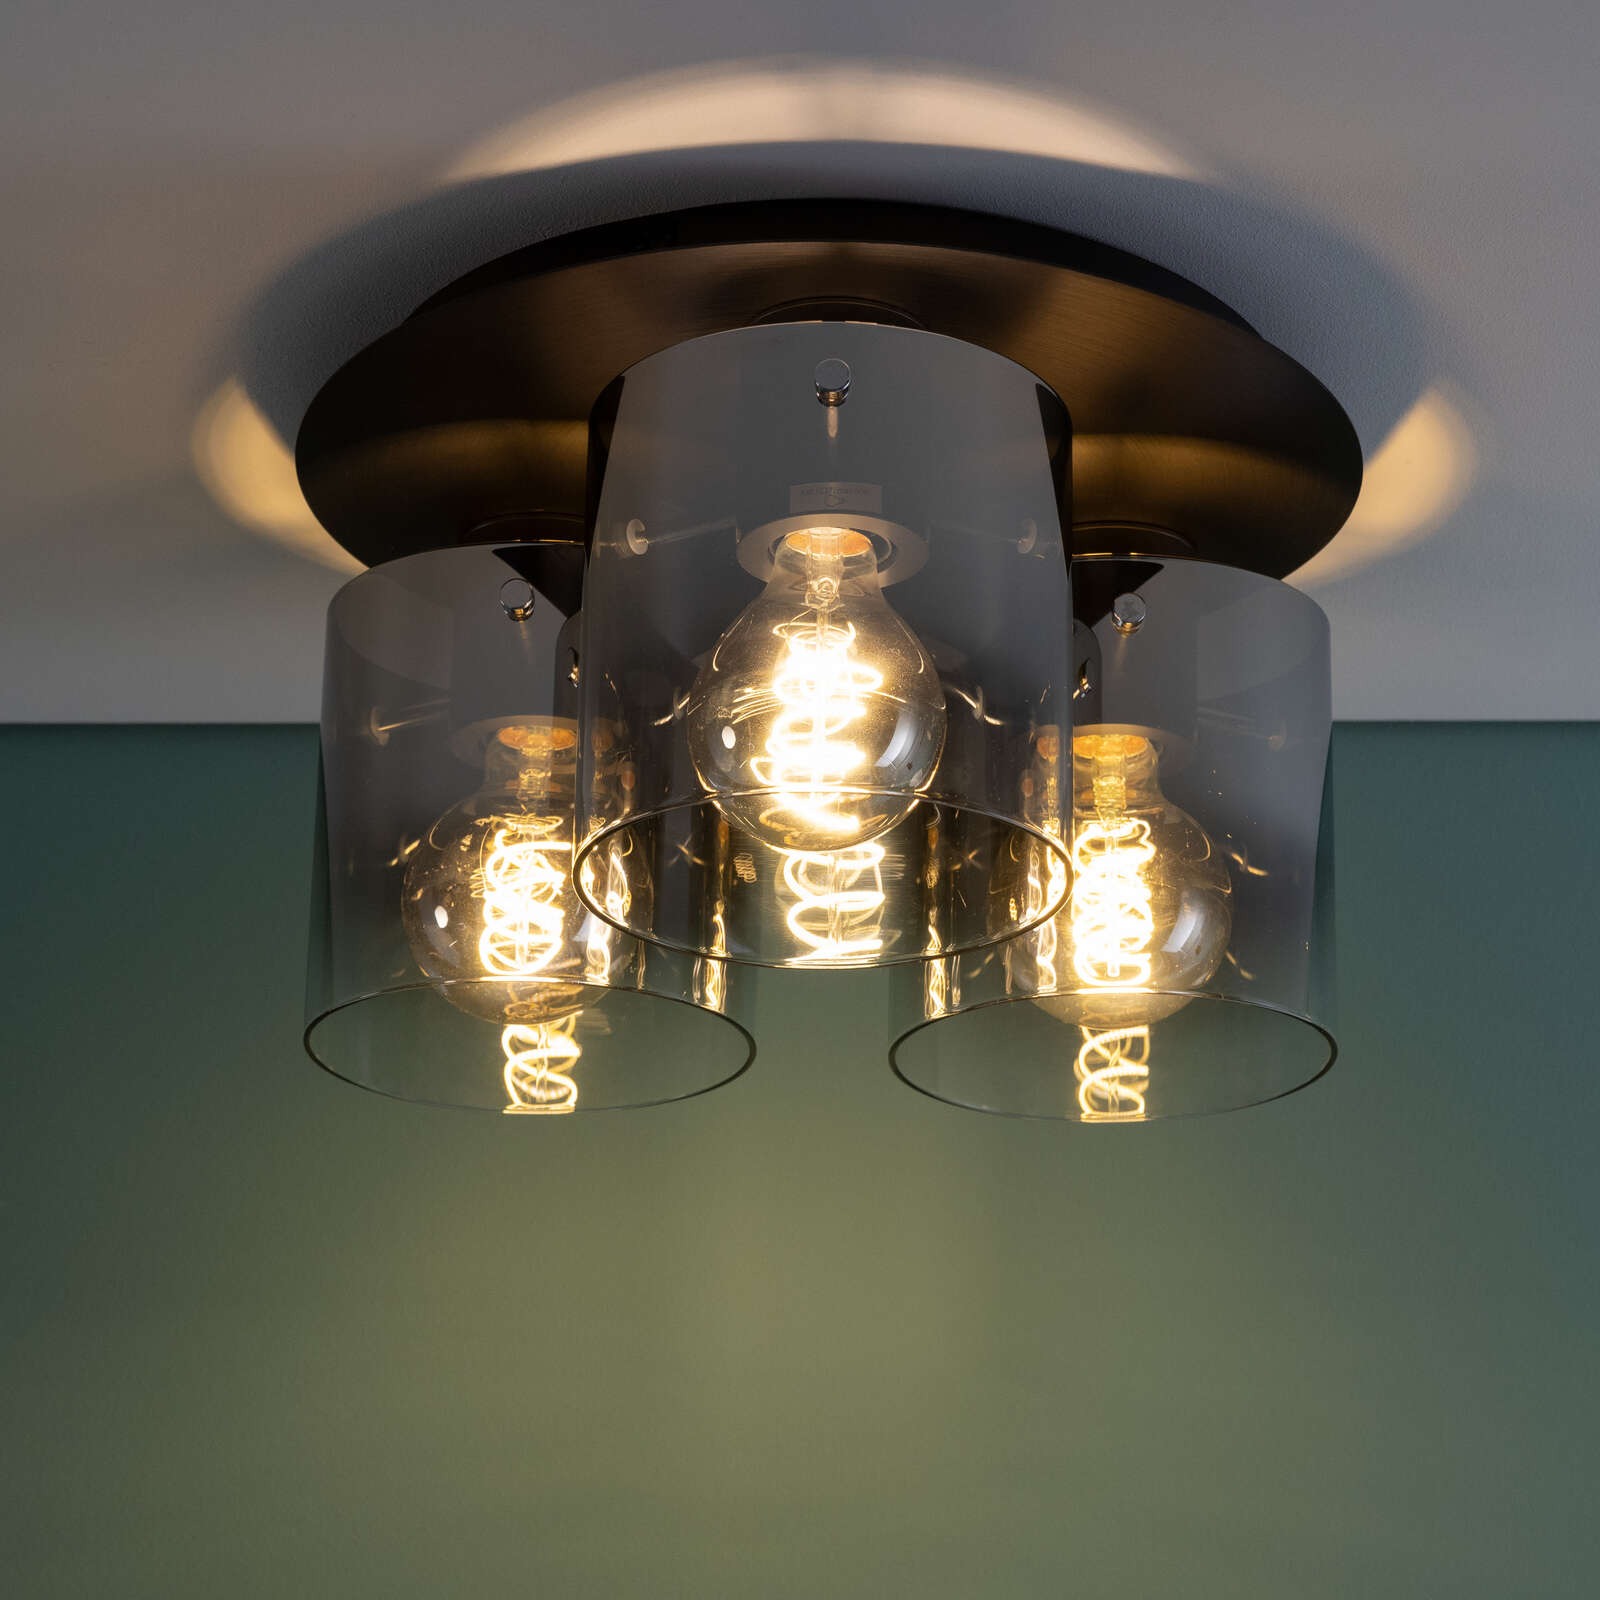             Glazen plafondlamp - Benett 4 - Bruin
        